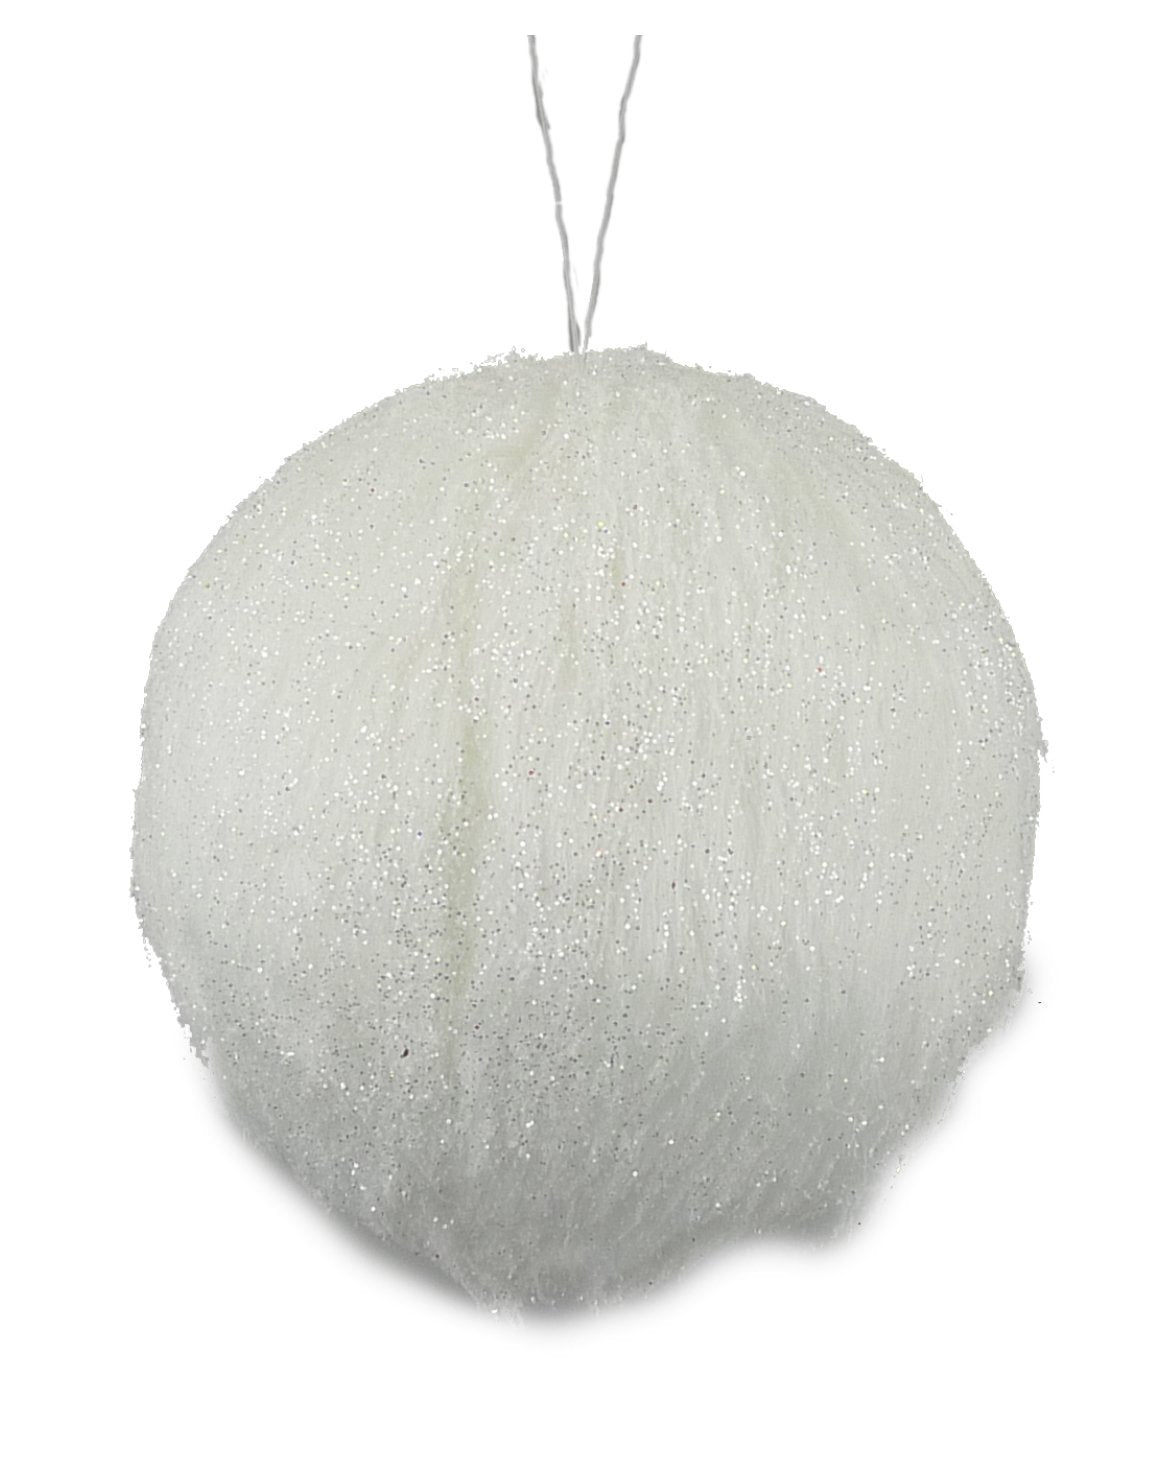 White furry ornament ball 4.5” - Greenery MarketOrnaments84604WT